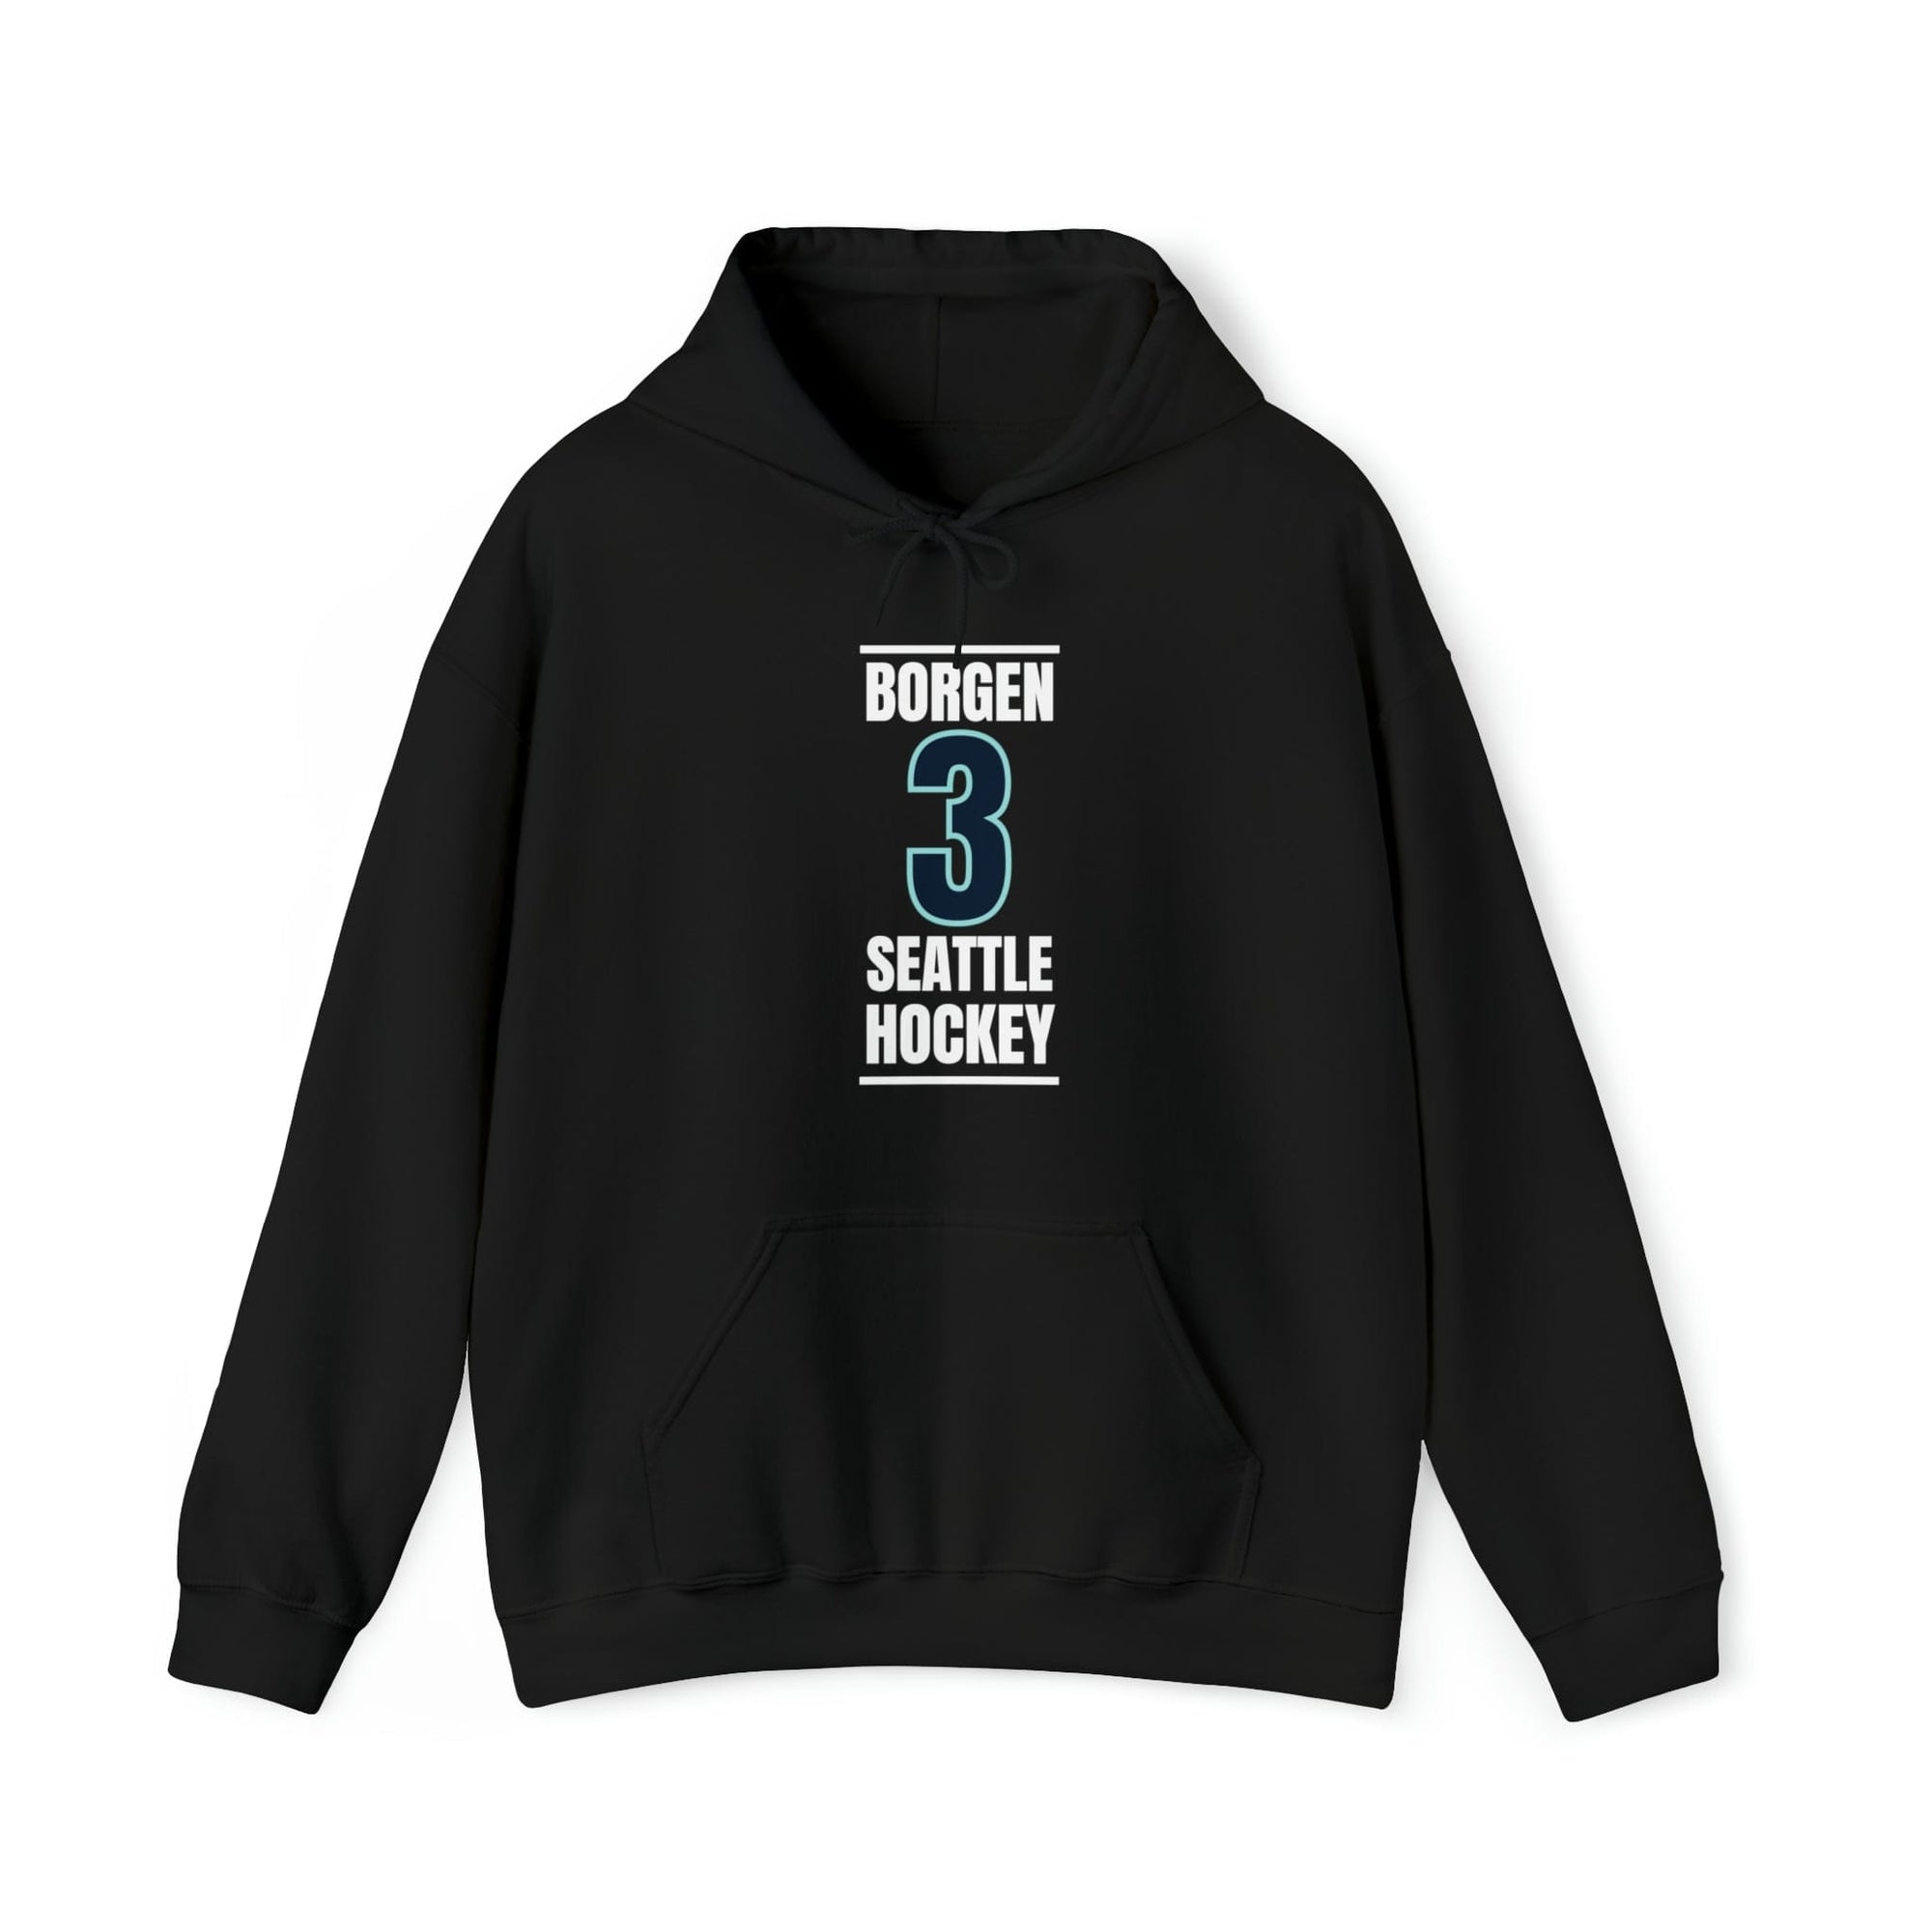 Hoodie Borgen 3 Seattle Hockey Black Vertical Design Unisex Hooded Sweatshirt